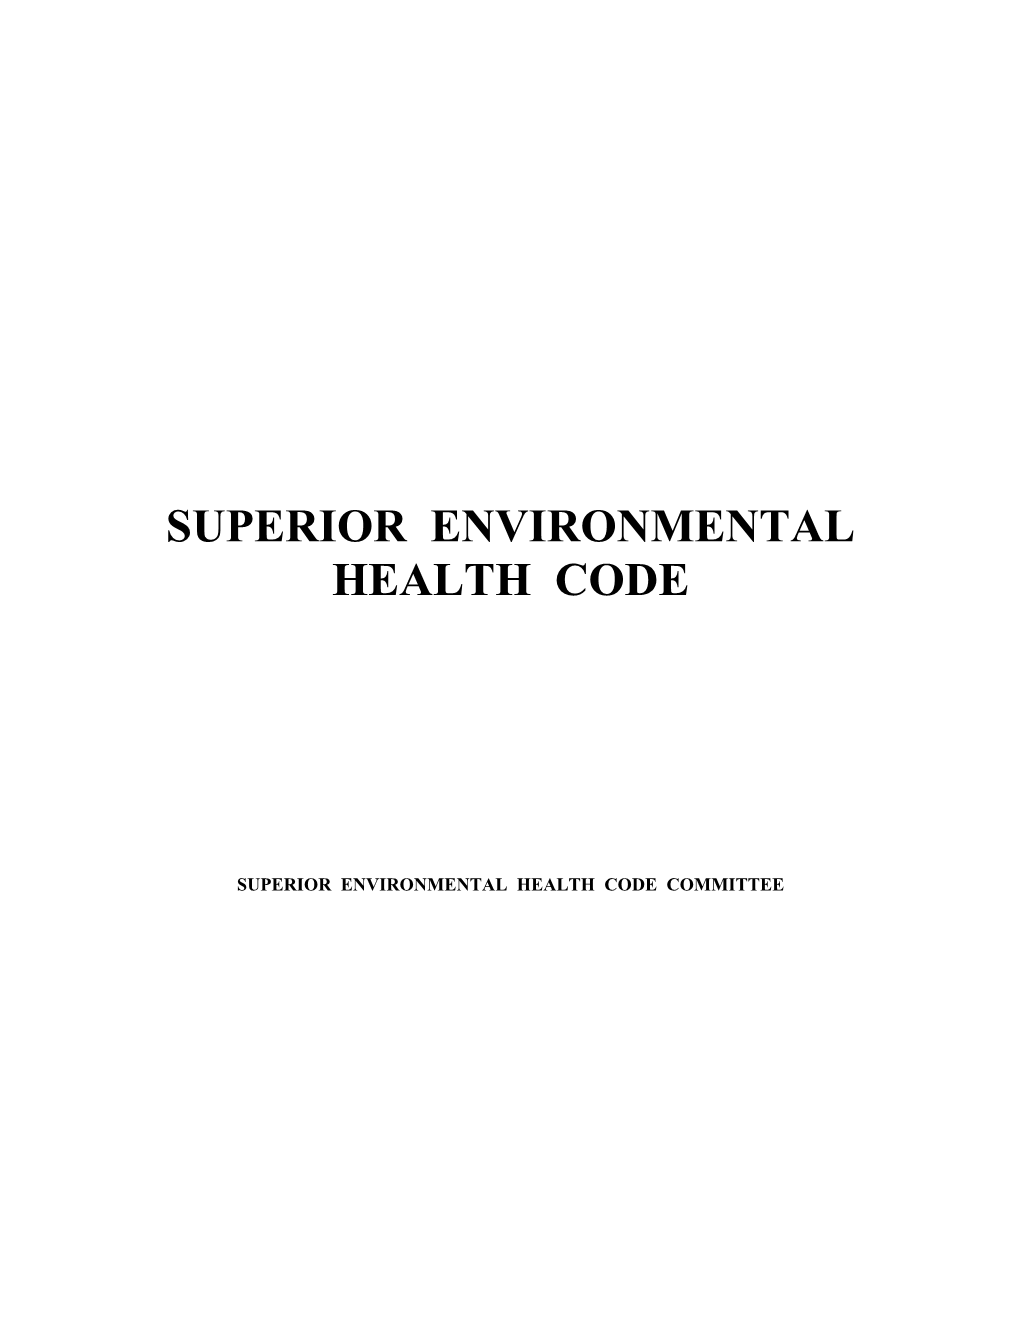 Superior Environmental Health Code Committee